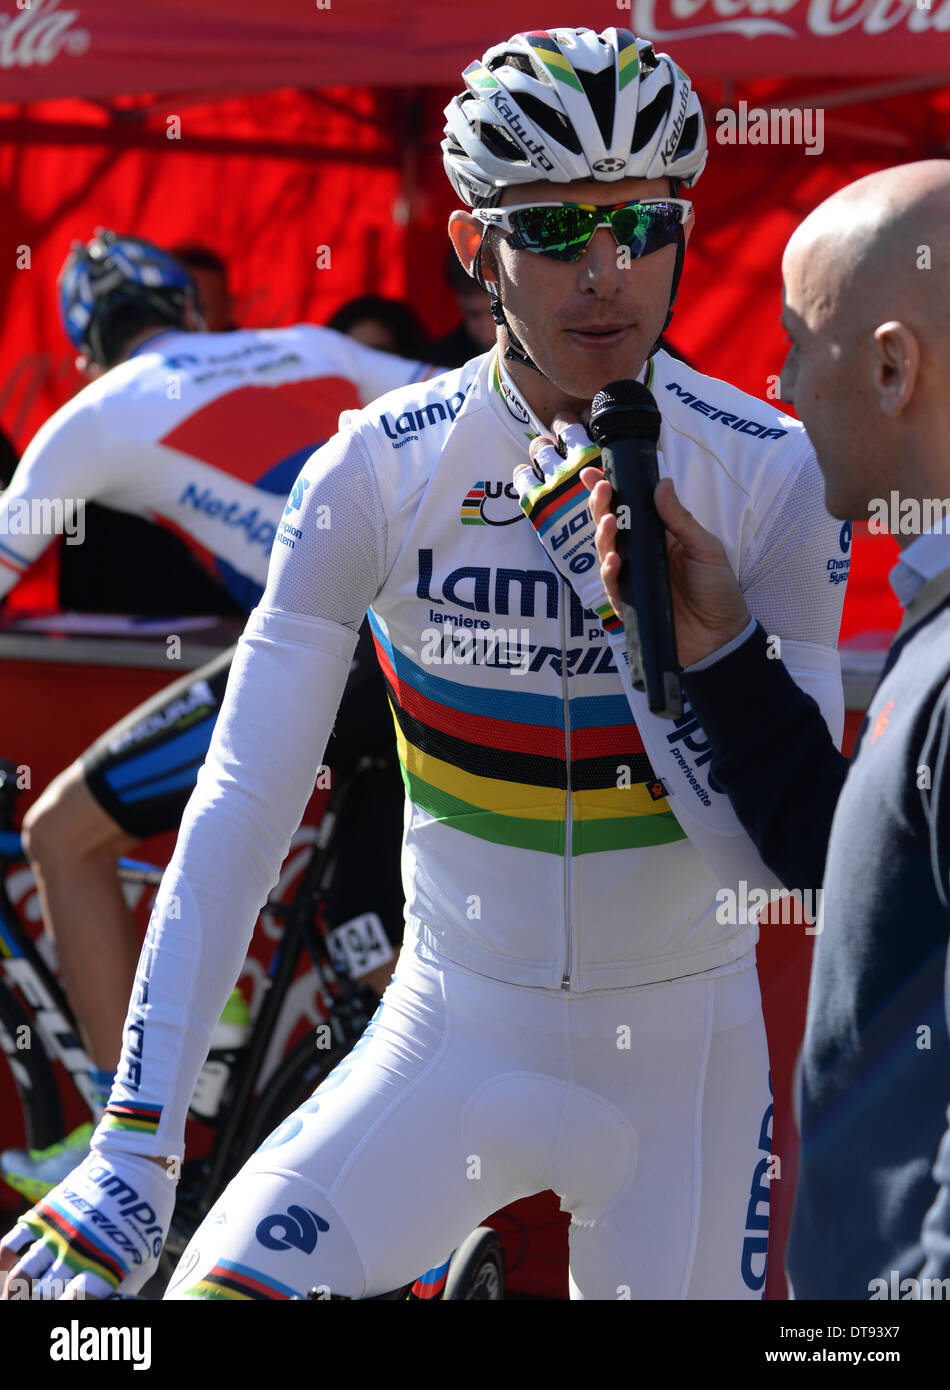 The Portuguese rider and World Champion Rui Costa in the 2014 Majorca  Cycling Challenge Stock Photo - Alamy